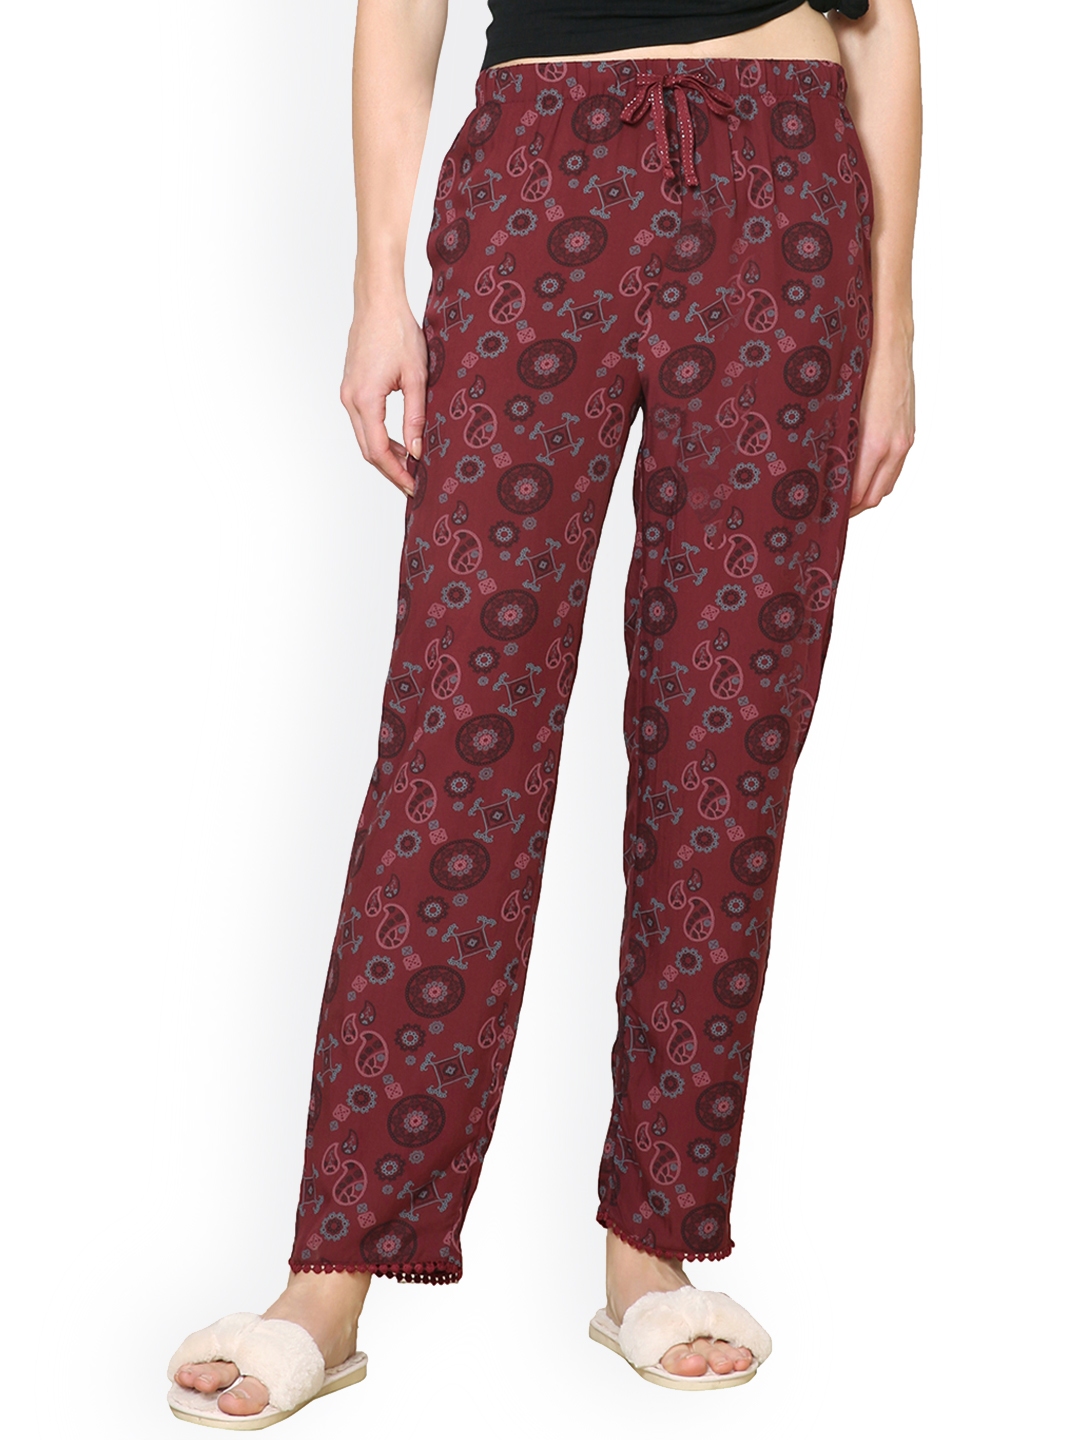 Van Heusen Intimates Pyjama, Printed Lounge Pants for Women at